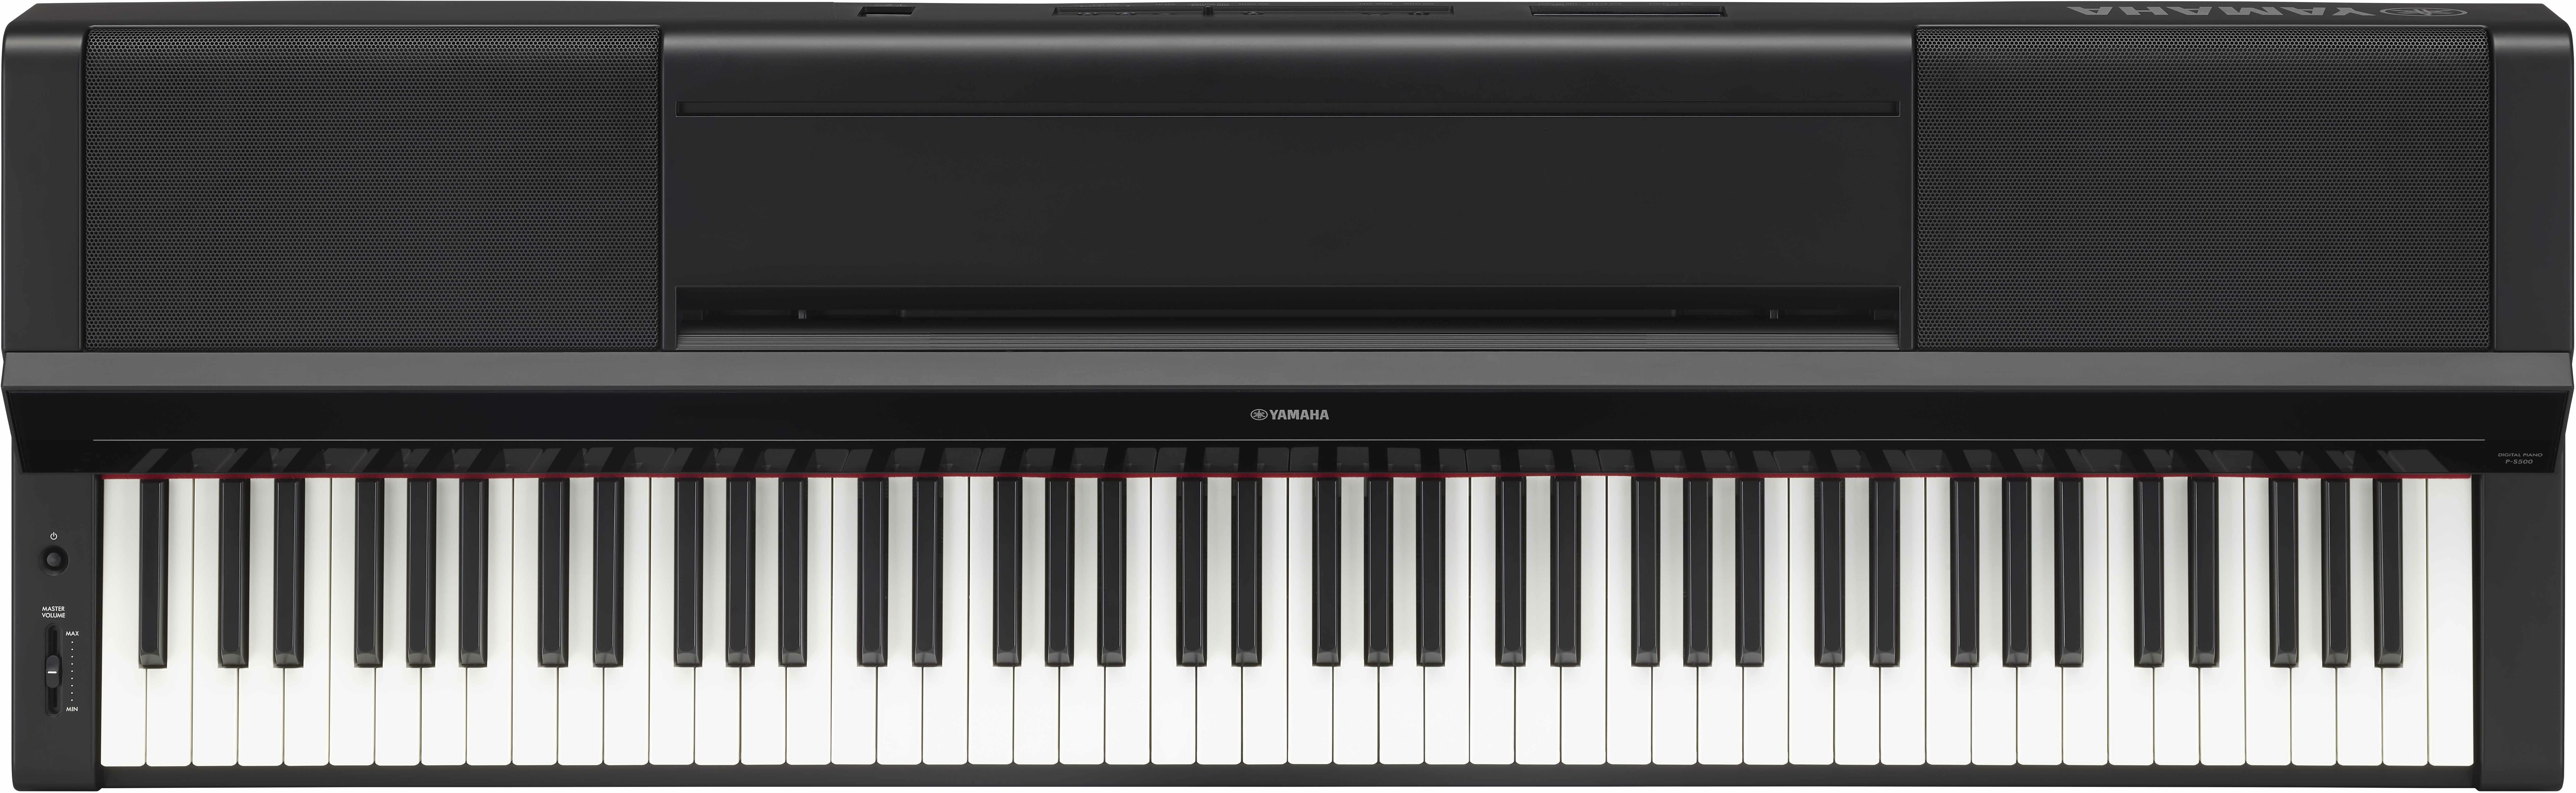 Yamaha P-s500 B - Digital Klavier - Main picture